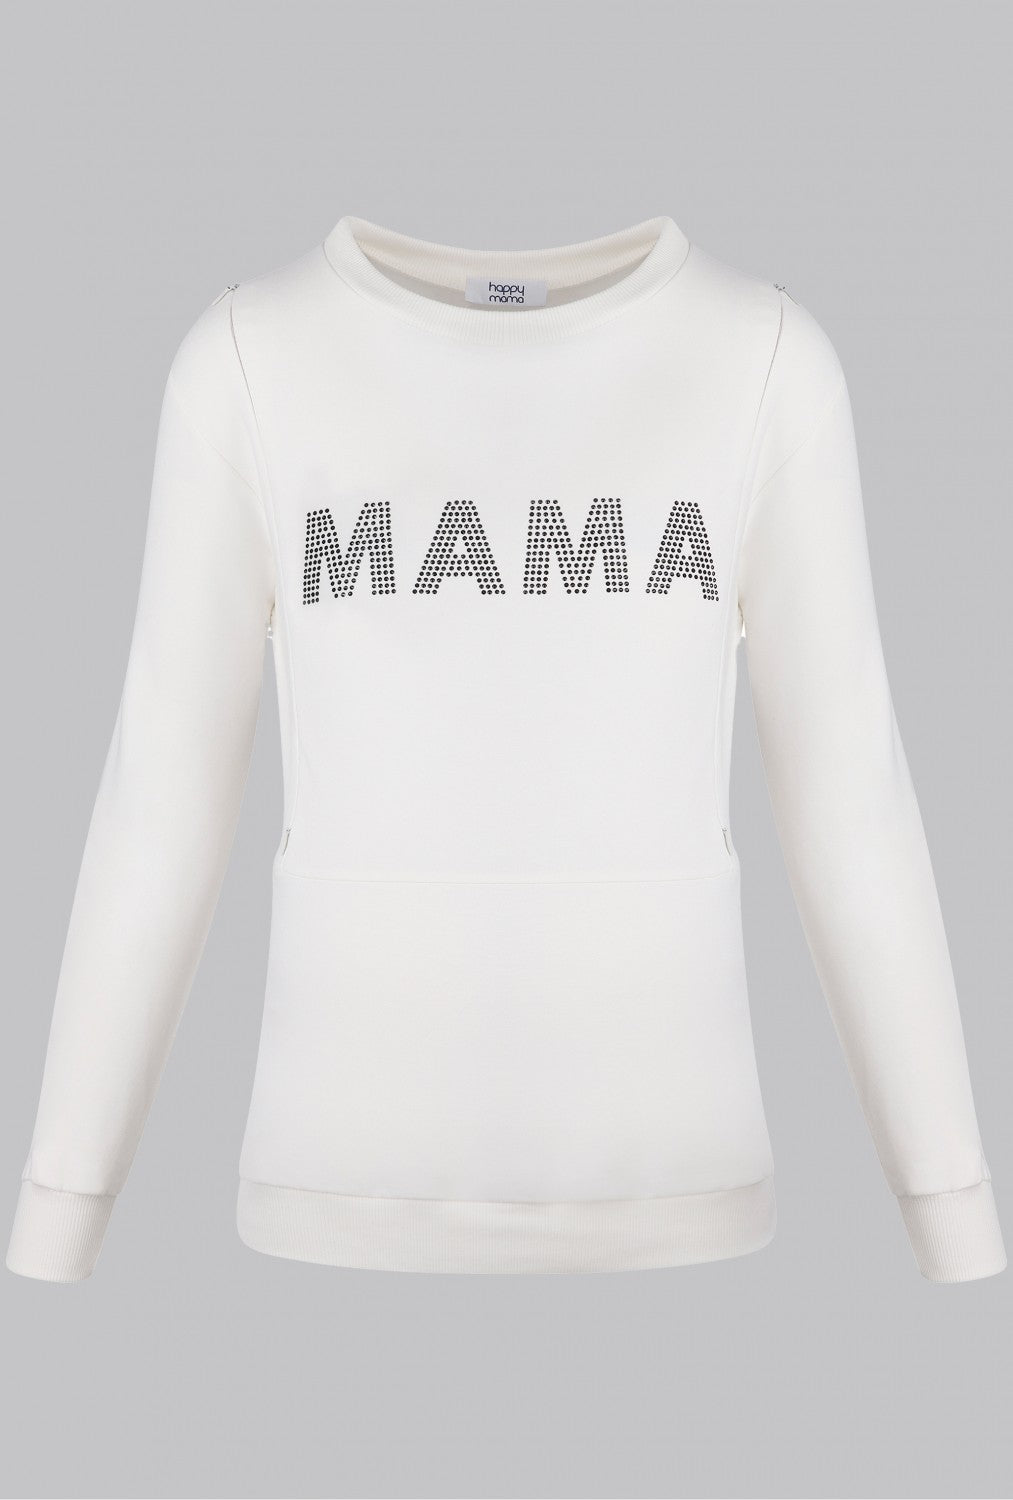 Women's Maternity Bling Sweatshirt